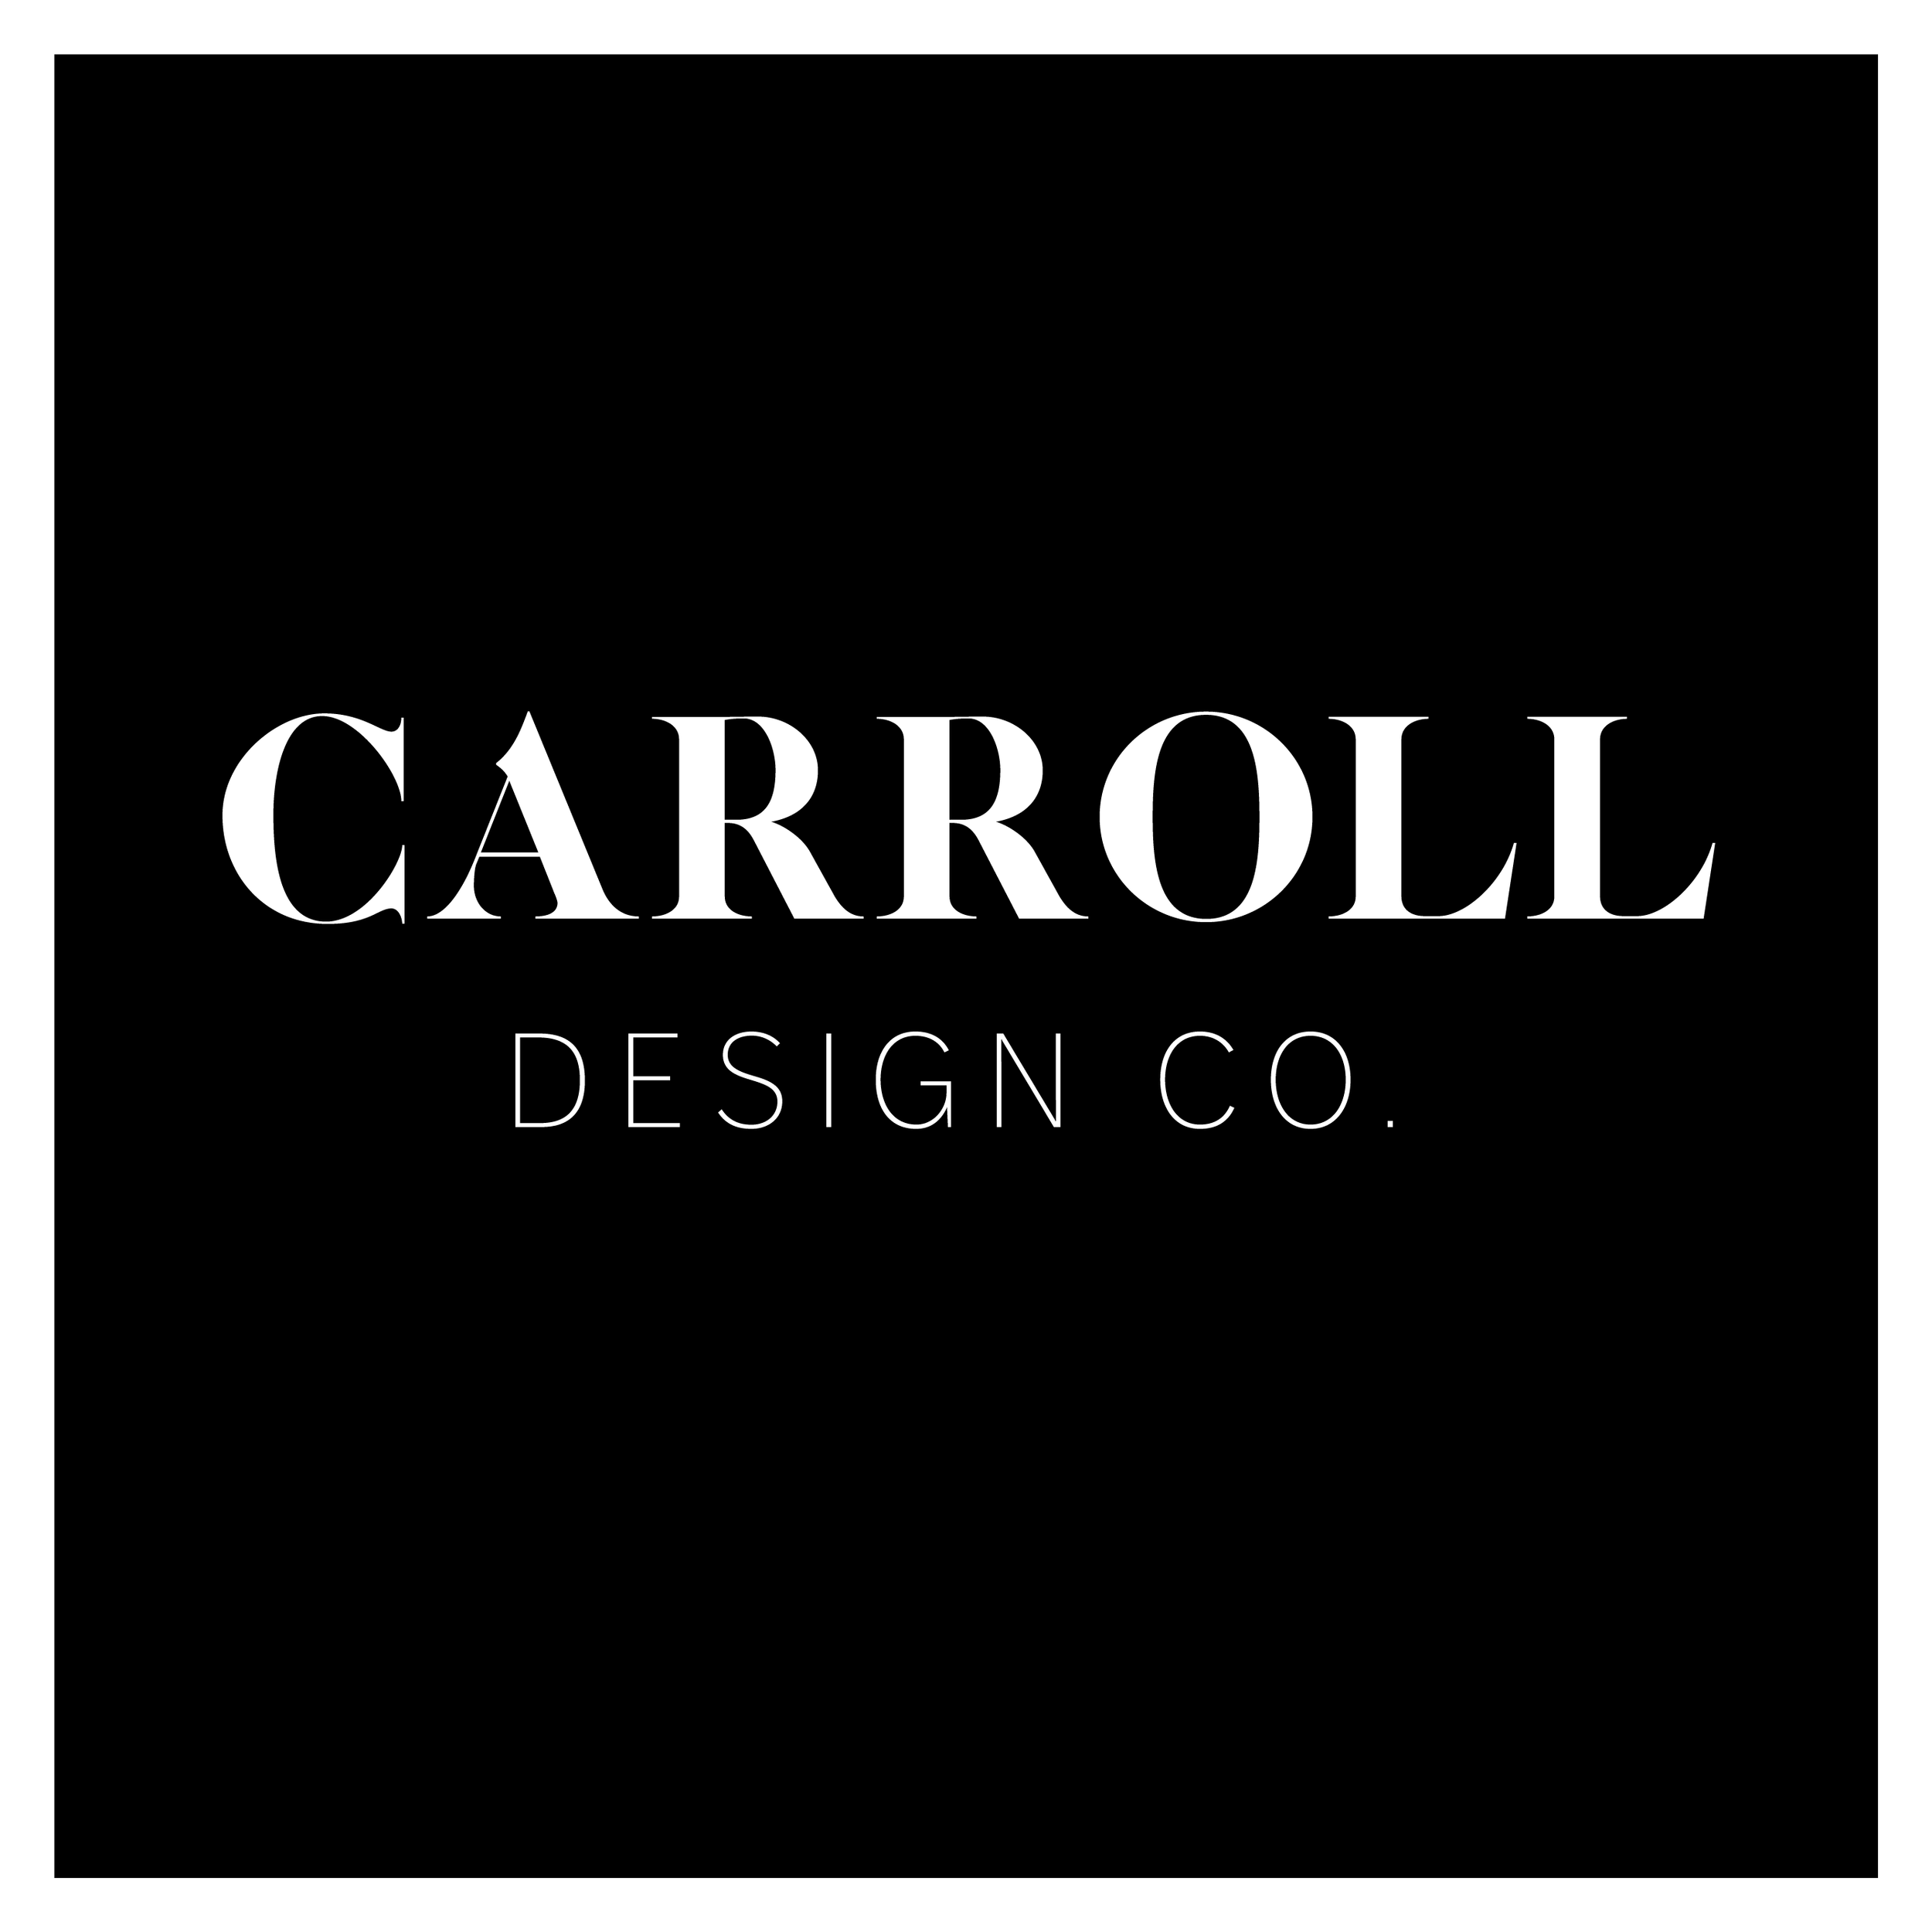 Carroll Design Co.